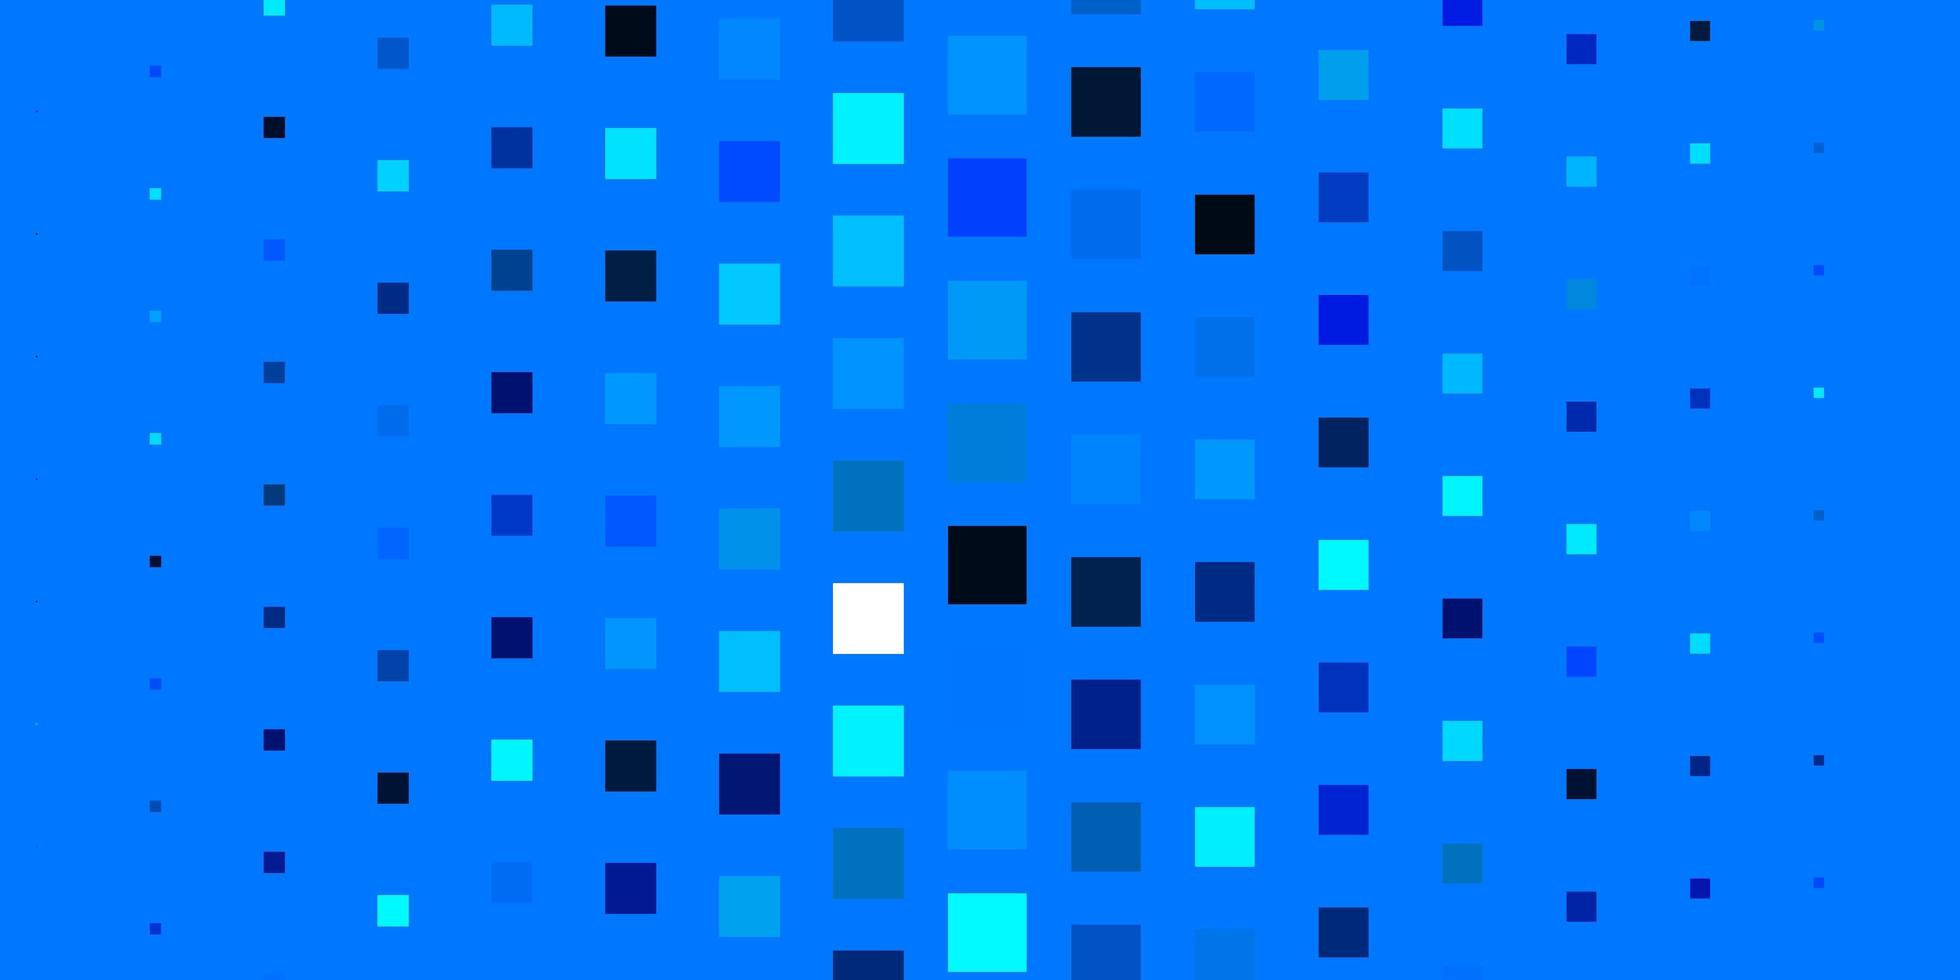 Fondo de vector azul claro en estilo poligonal. rectángulos con degradado de colores sobre fondo abstracto. patrón para folletos comerciales, folletos